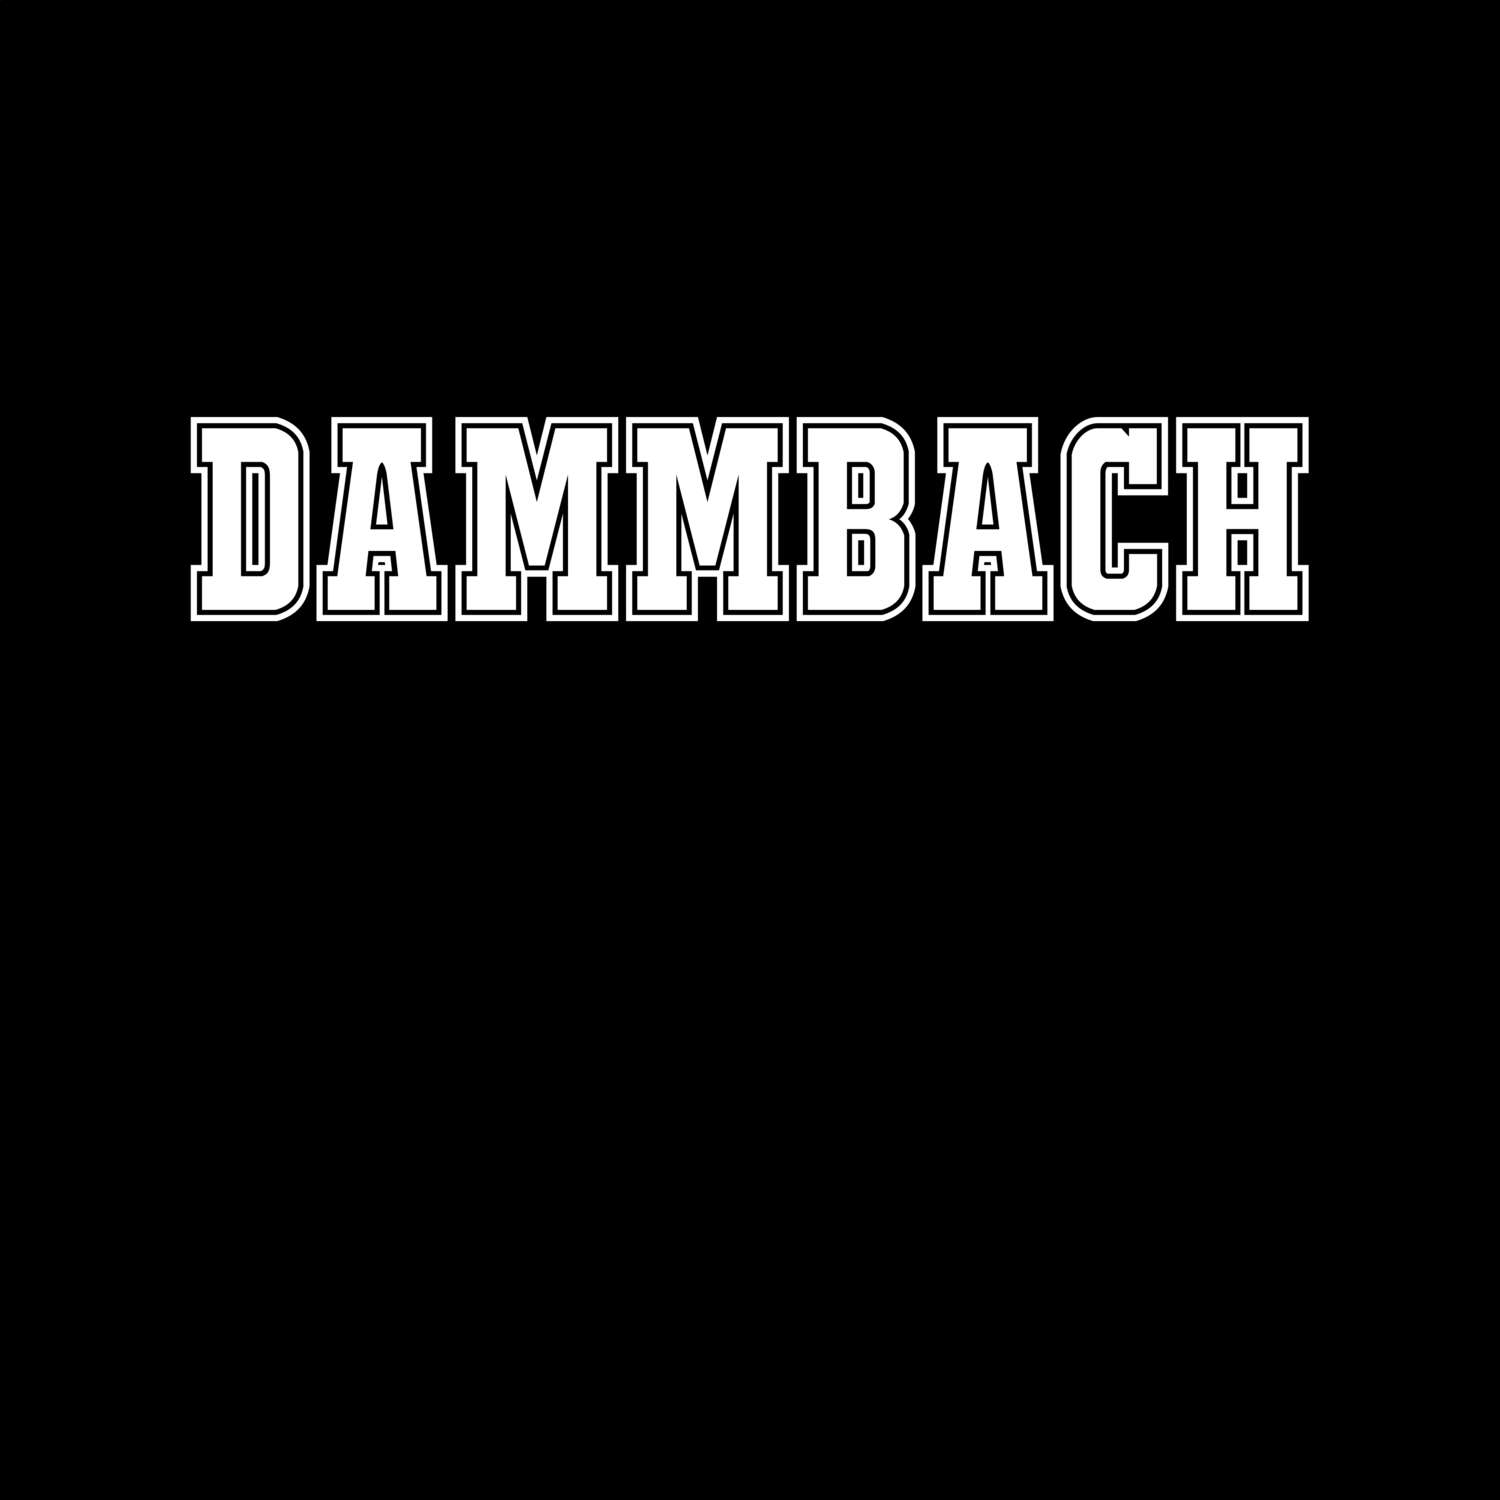 Dammbach T-Shirt »Classic«